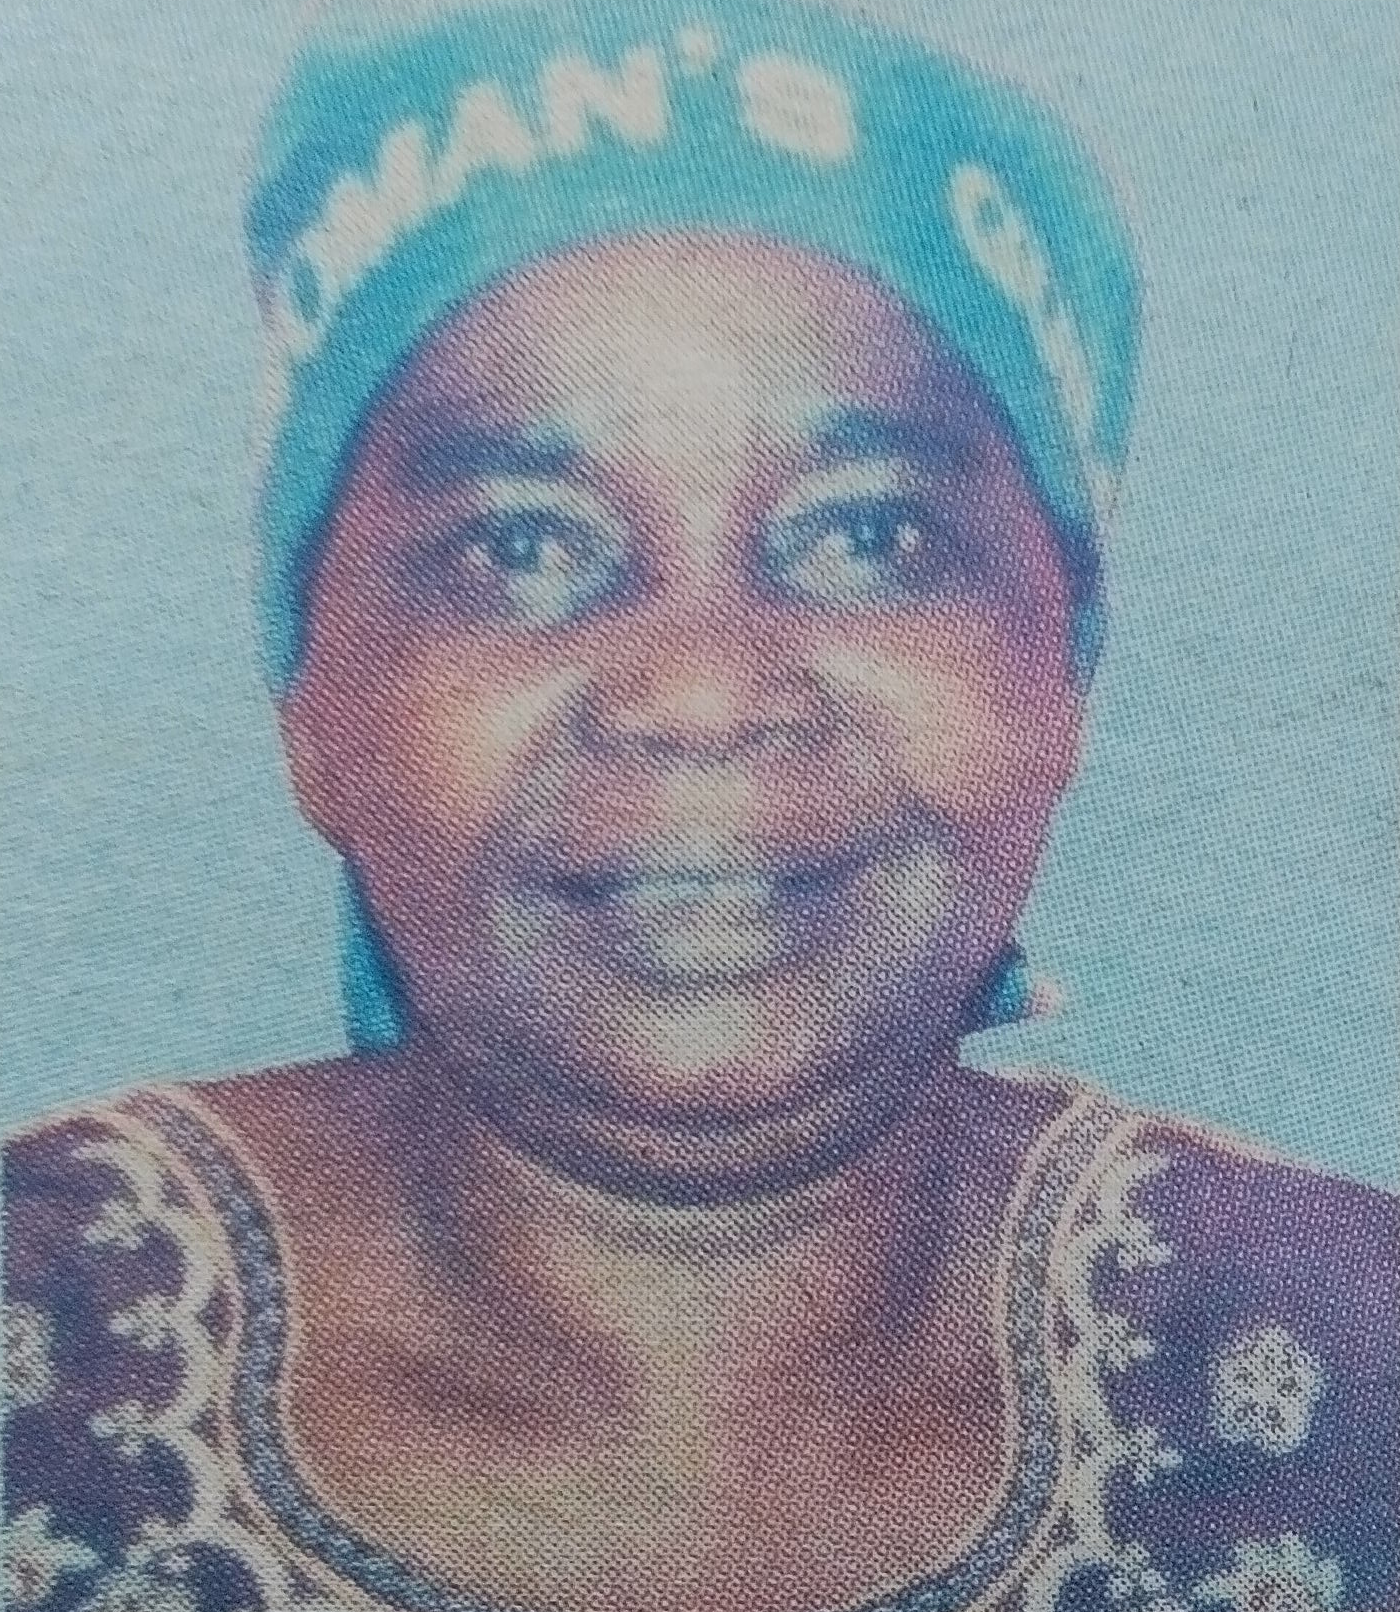 Obituary Image of Catherine Ciambuba Nkune